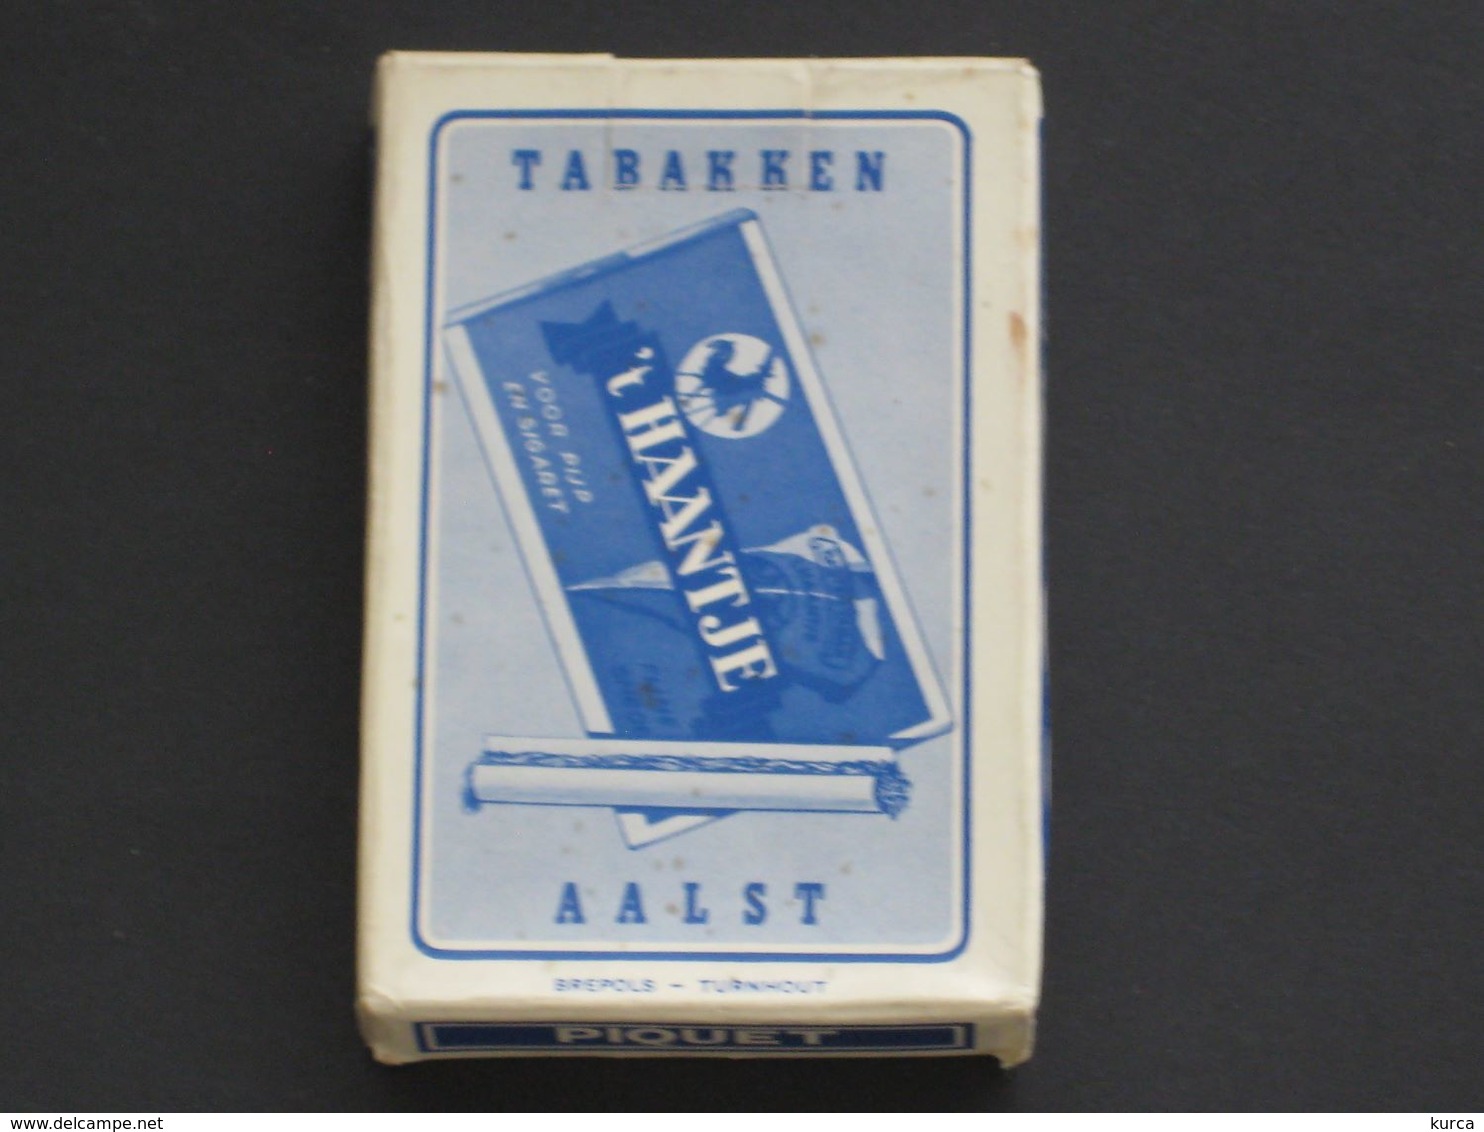 Compleet Oud Spel Kaarten 32+1joker Tabakken 't HAANTJE - AALST Tabac Tabak - 32 Carte